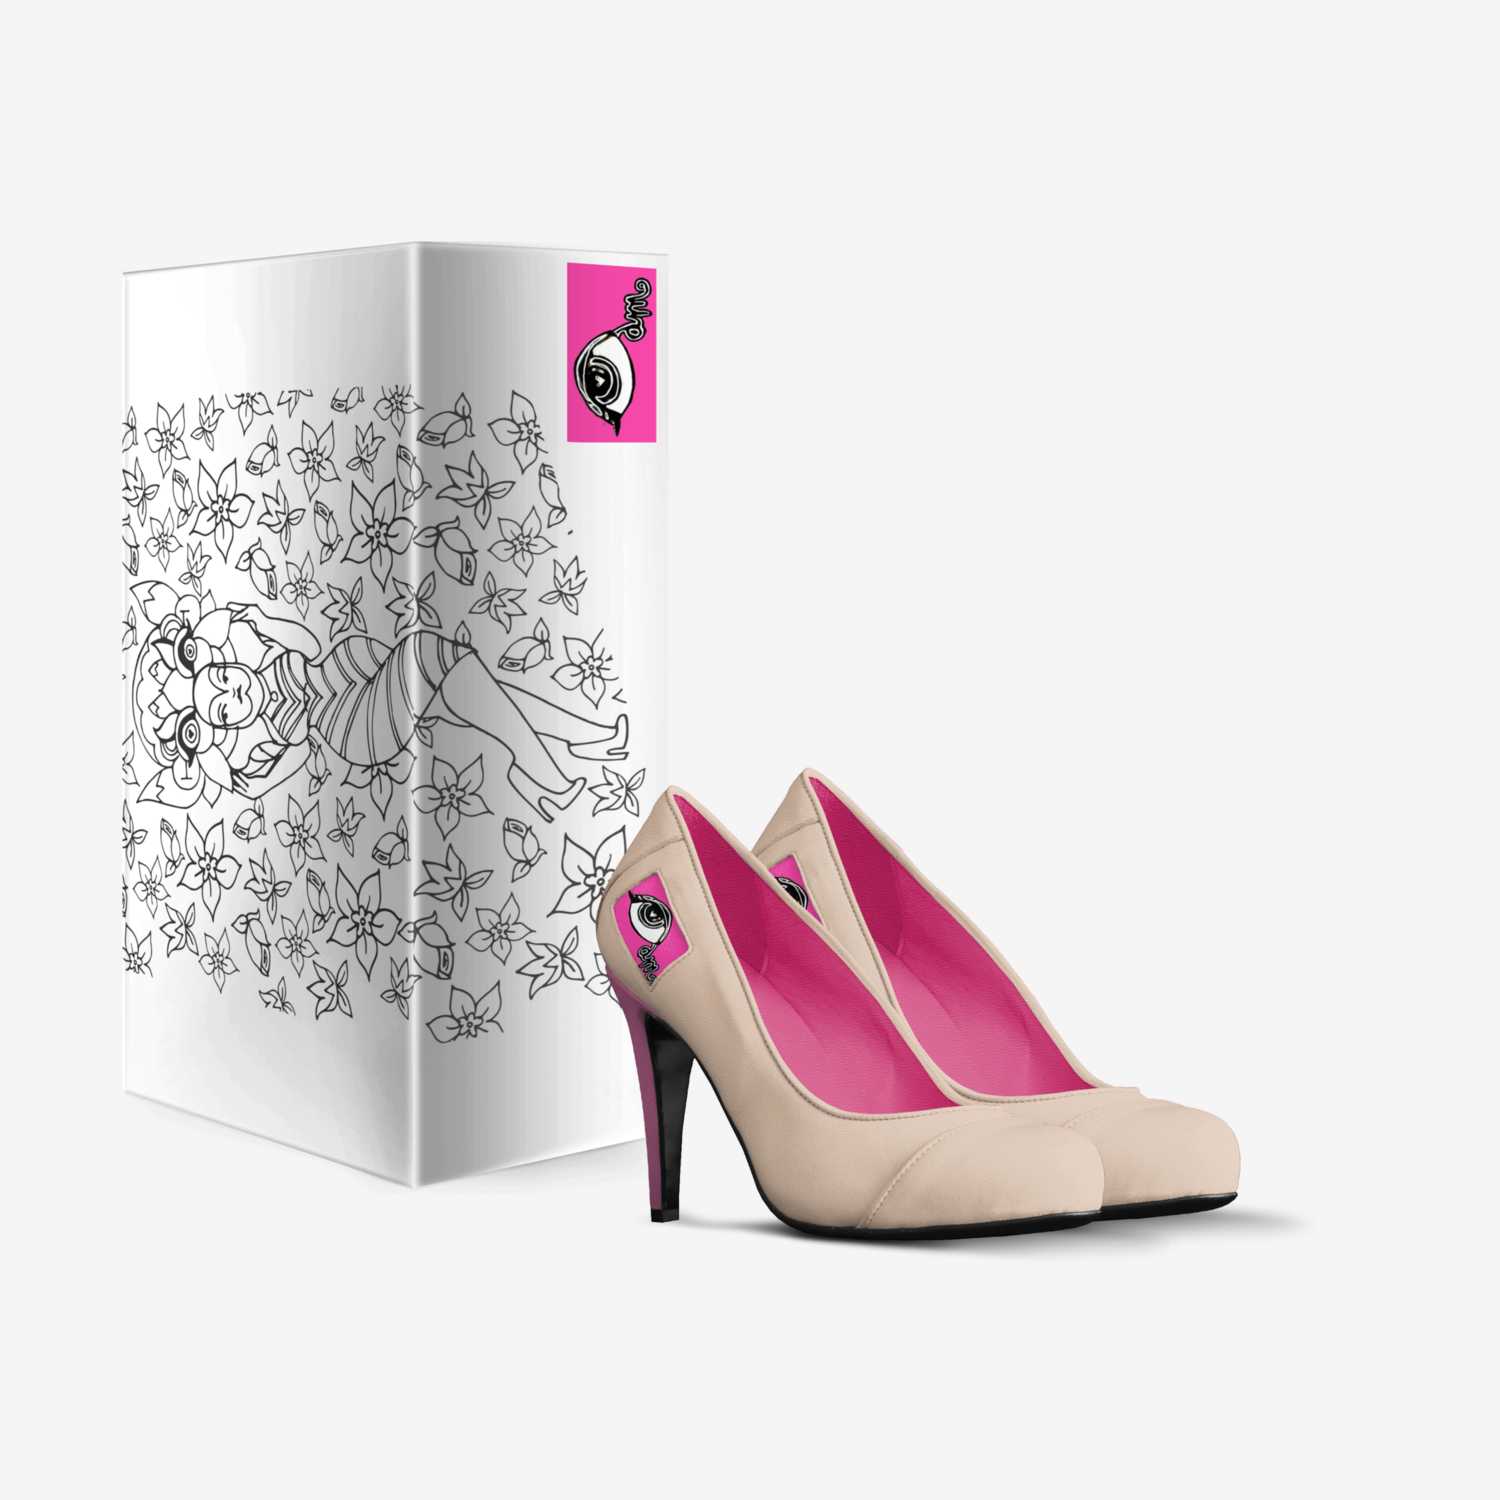 iamai fresh custom made in Italy shoes by Ambrosia Sullivan | Box view